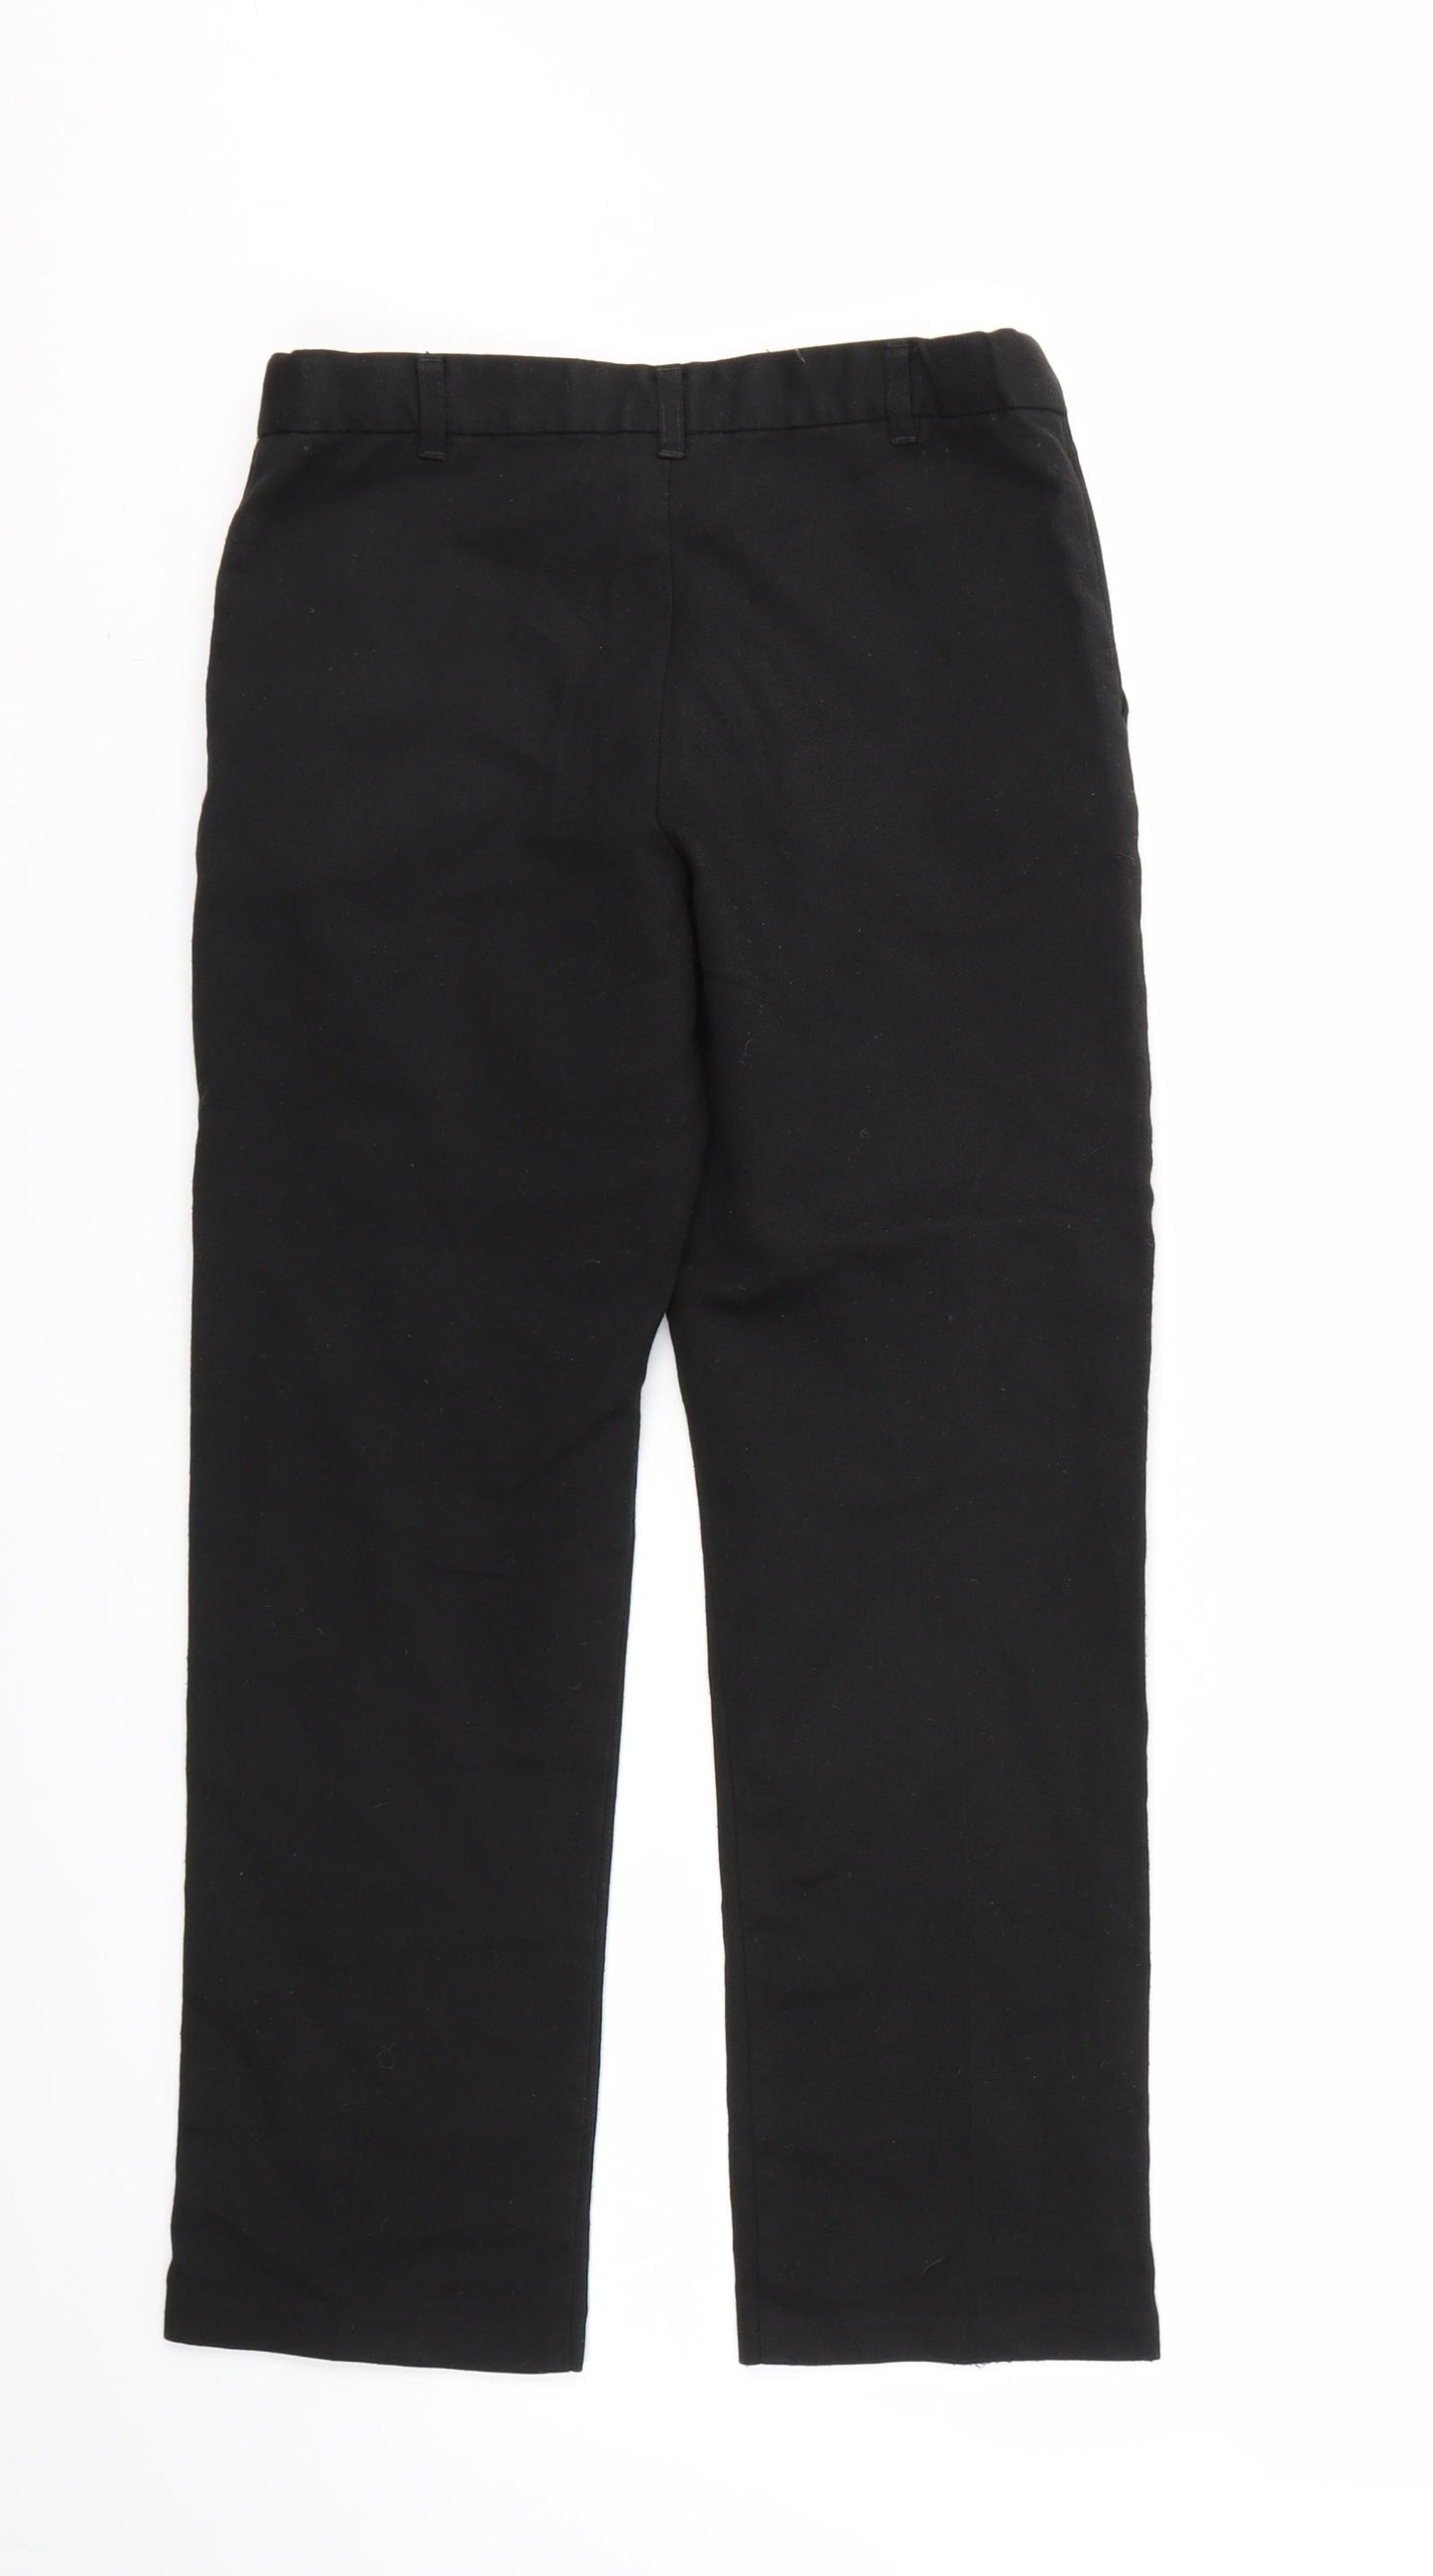 George Boys Black   Capri Trousers Size 9-10 Years